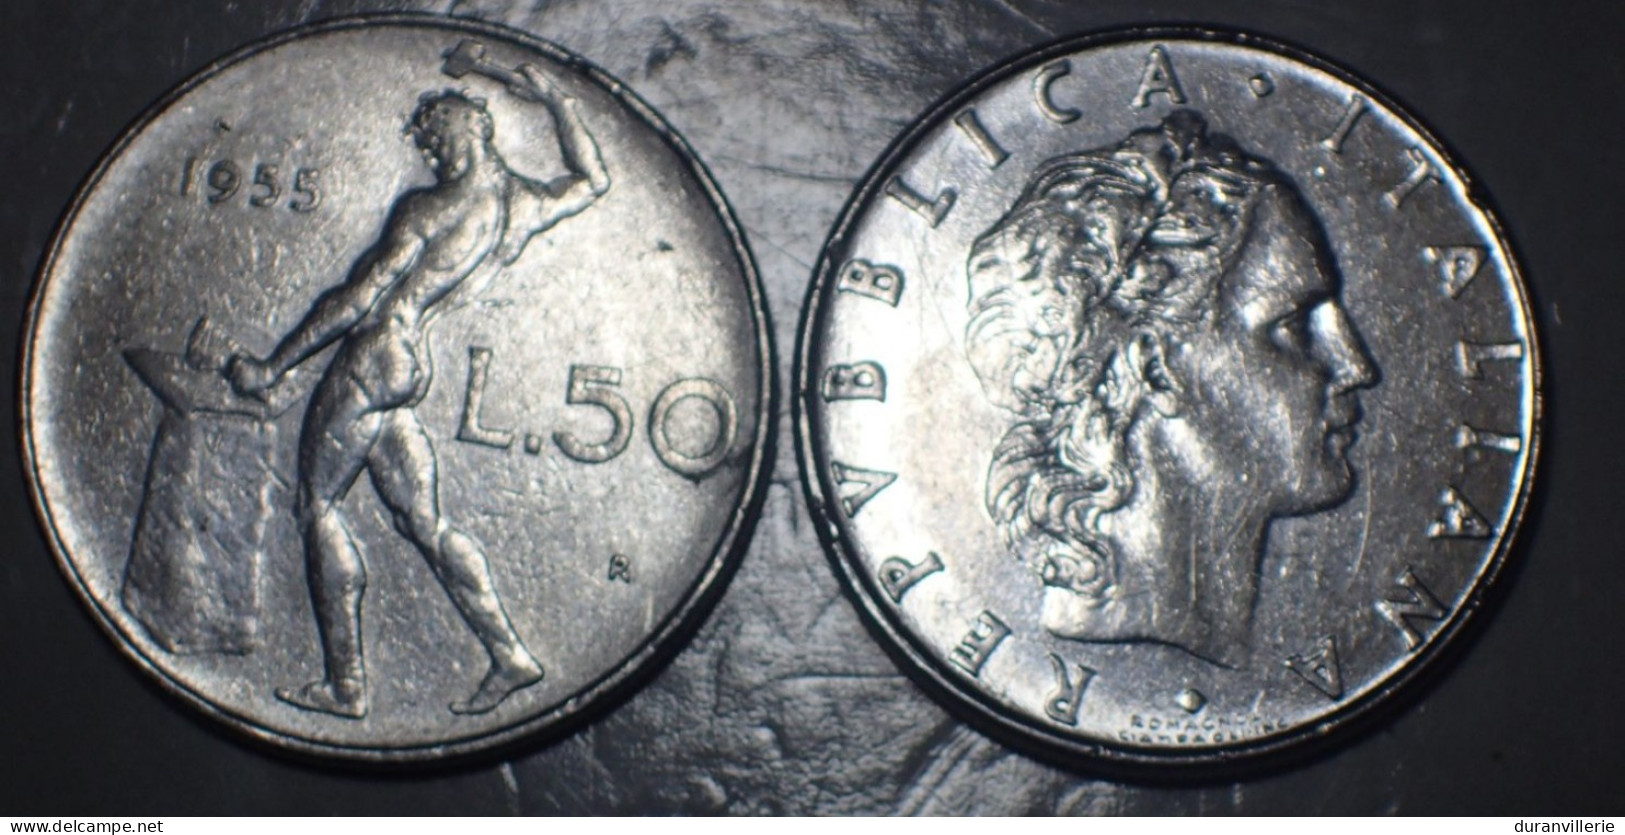 Italia - Italie - 50 Lire 1955 R - Republica Italiana - 50 Liras